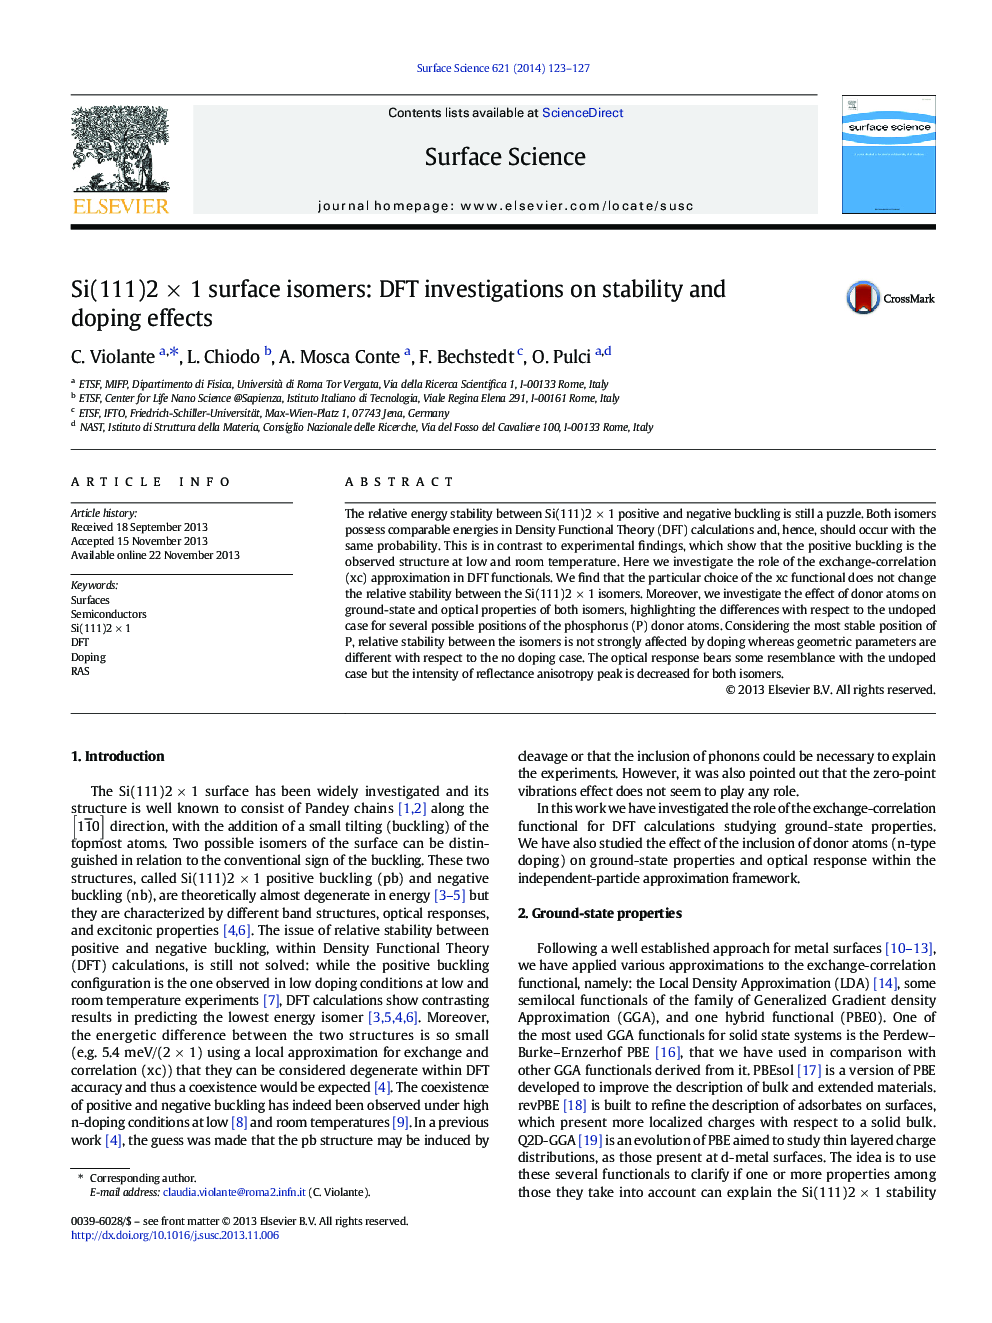 Si(111)2Â ÃÂ 1 surface isomers: DFT investigations on stability and doping effects